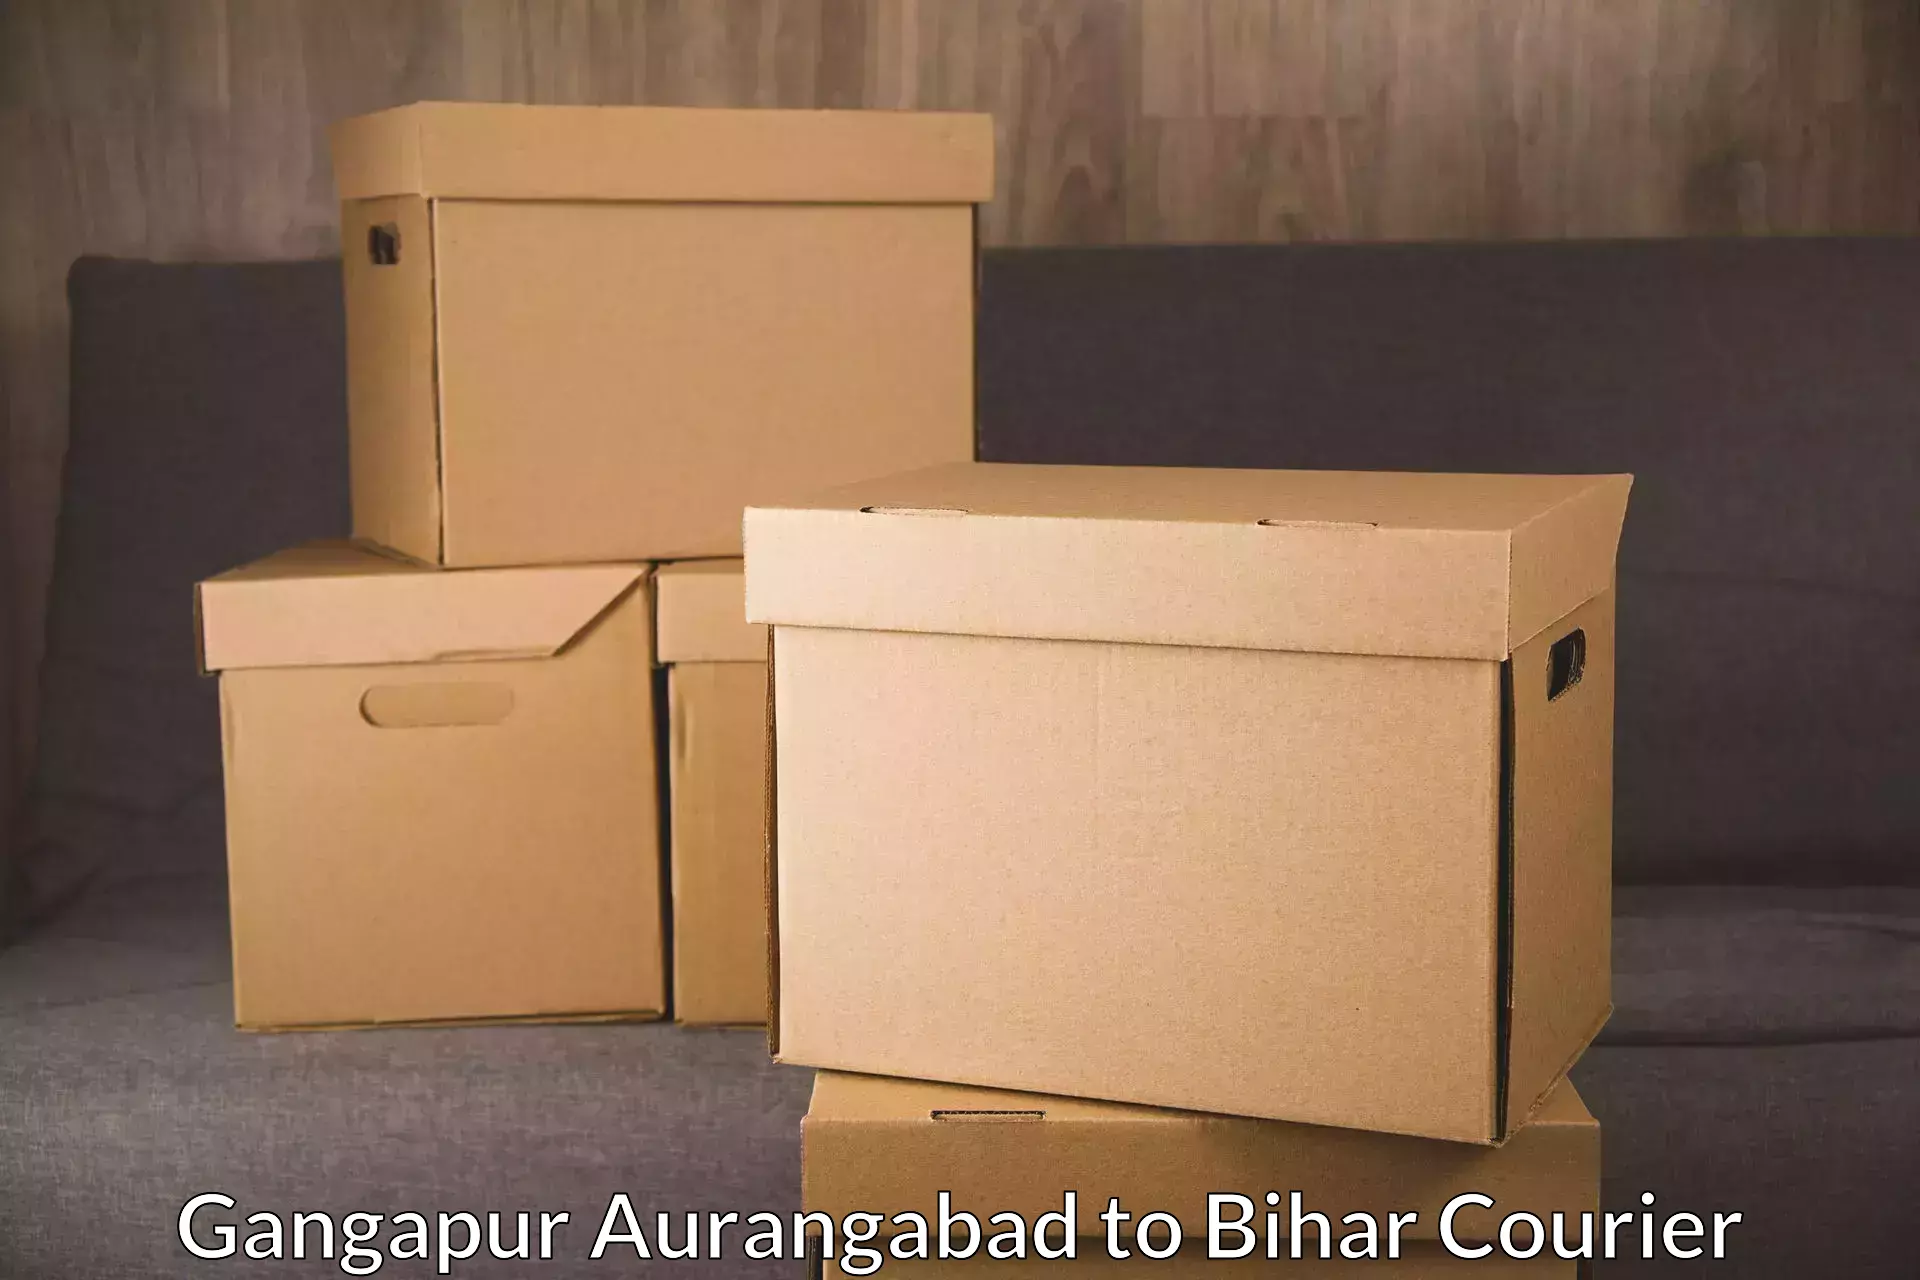 State-of-the-art courier technology Gangapur Aurangabad to Kishunganj